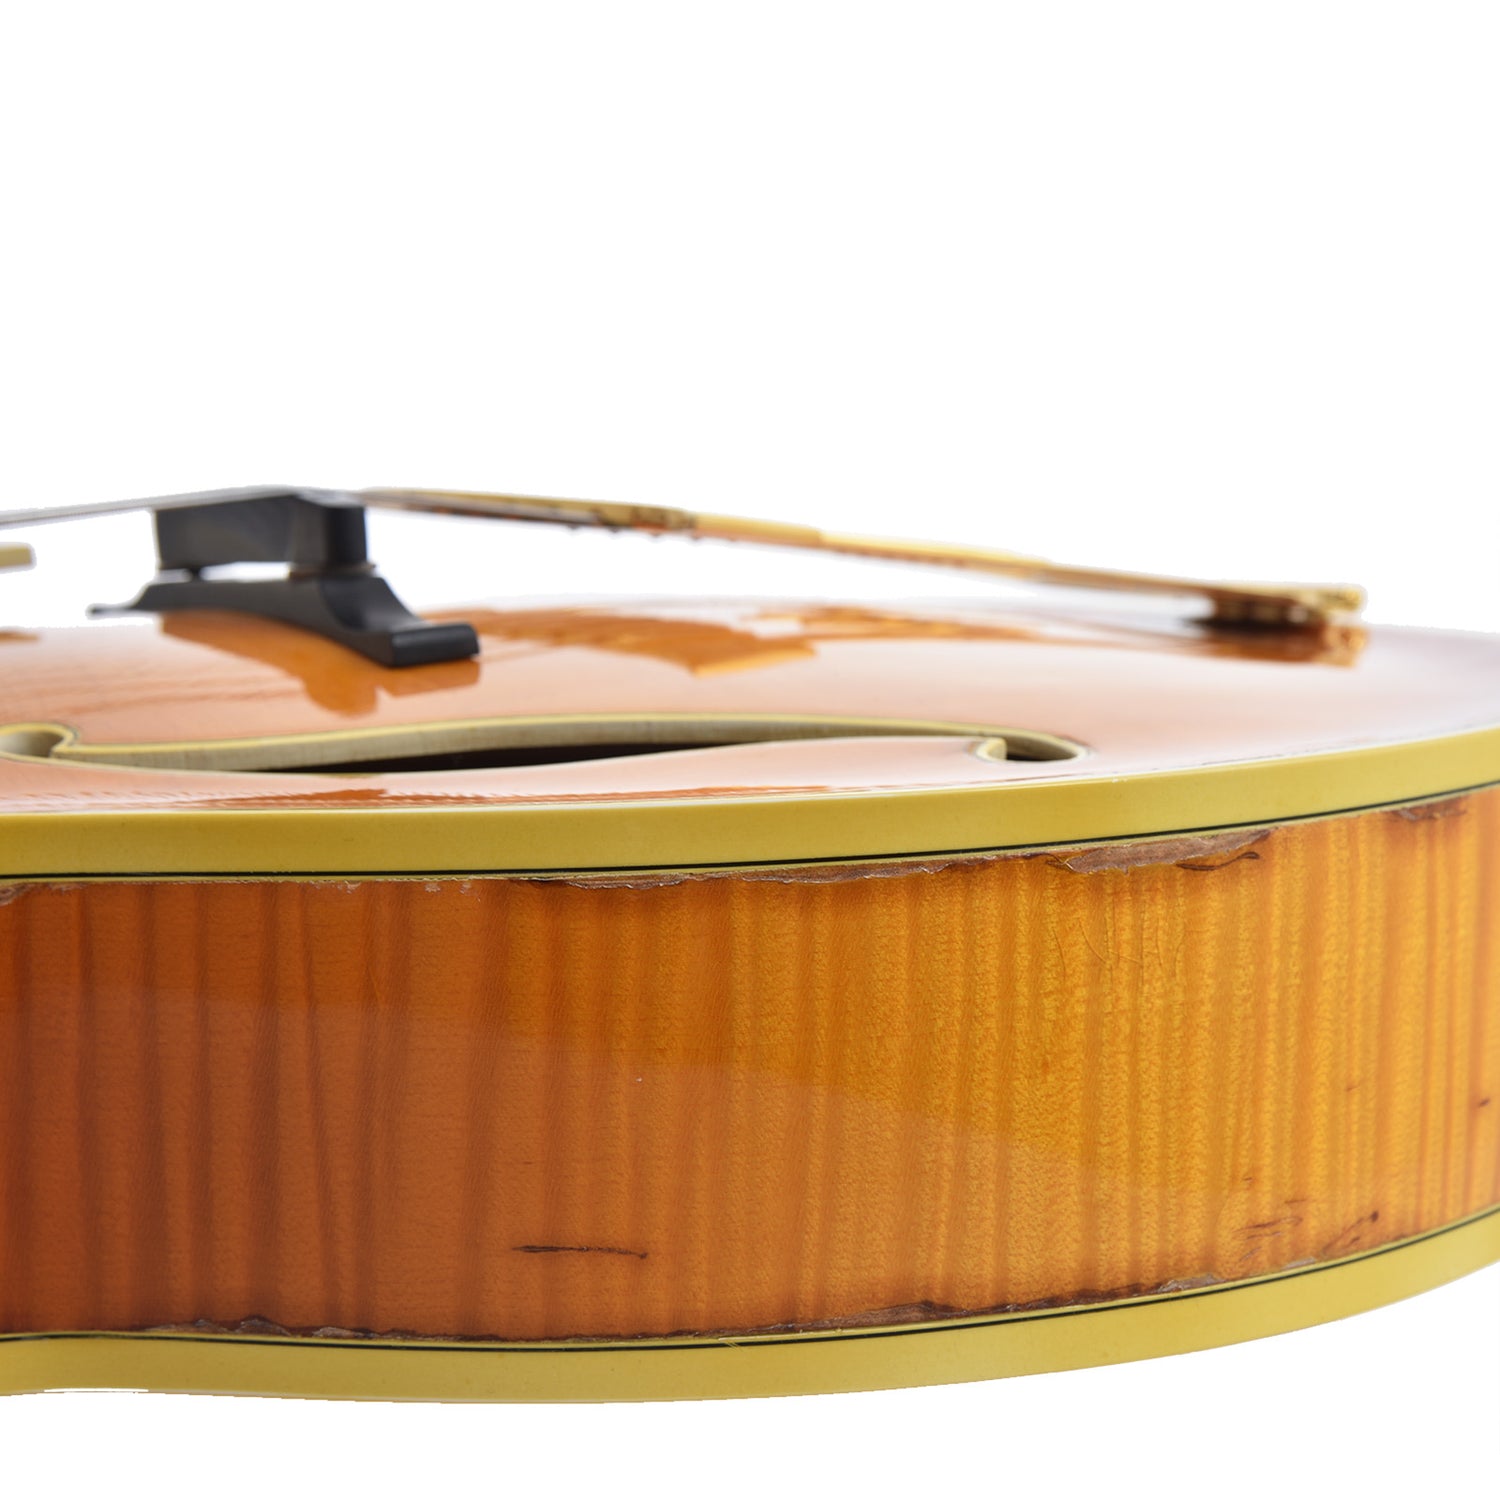 Image 16 of Hagstrom Jimmy D'Aquisto Prototype (c.1968) - SKU# 45U-209531 : Product Type Archtop Acoustic Guitars : Elderly Instruments